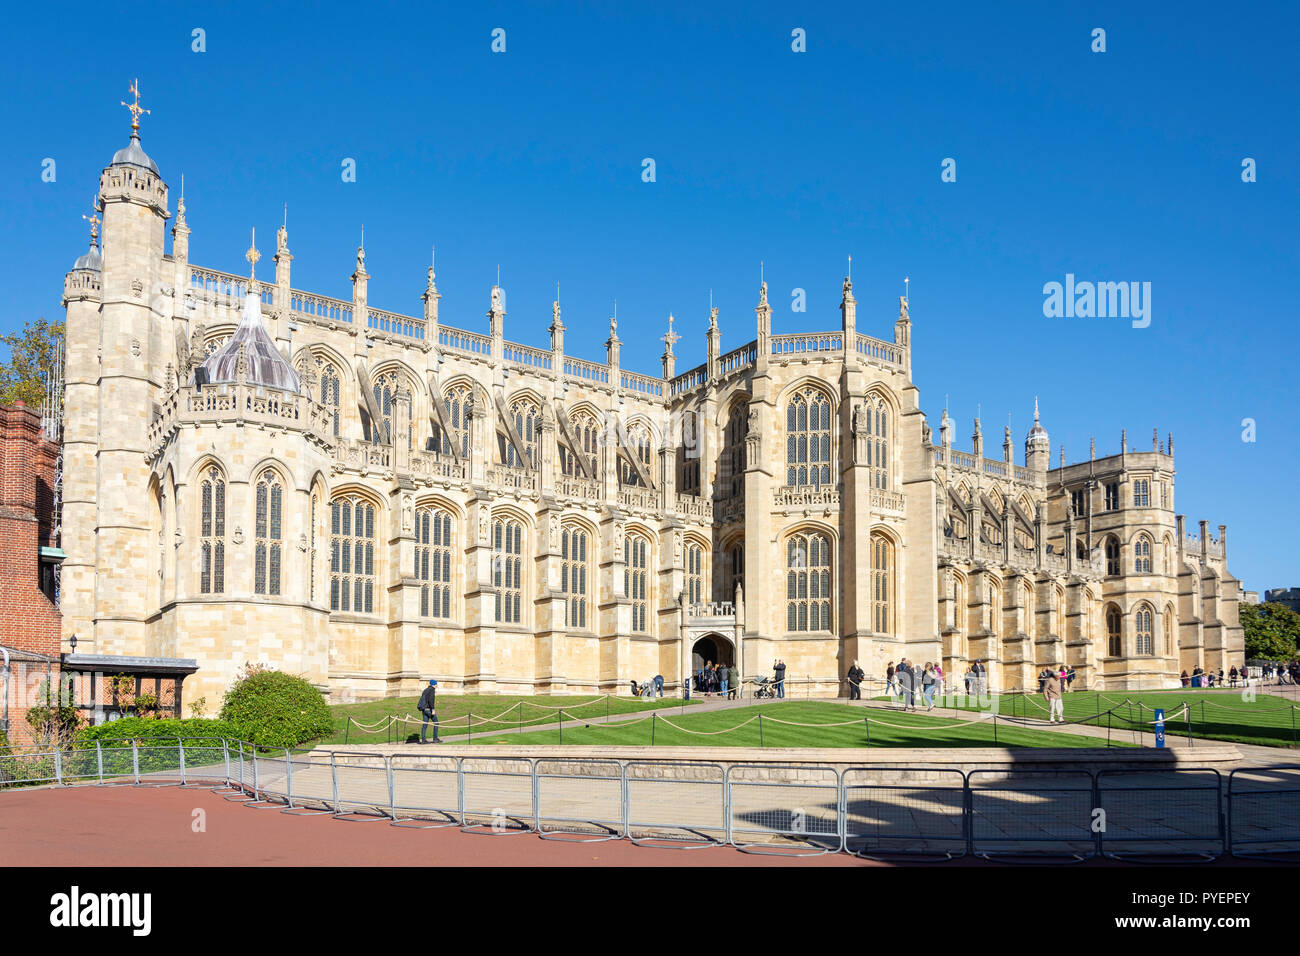 La Capilla de St George, Bajar Ward, El Castillo de Windsor, Windsor, Berkshire, Inglaterra, Reino Unido Foto de stock